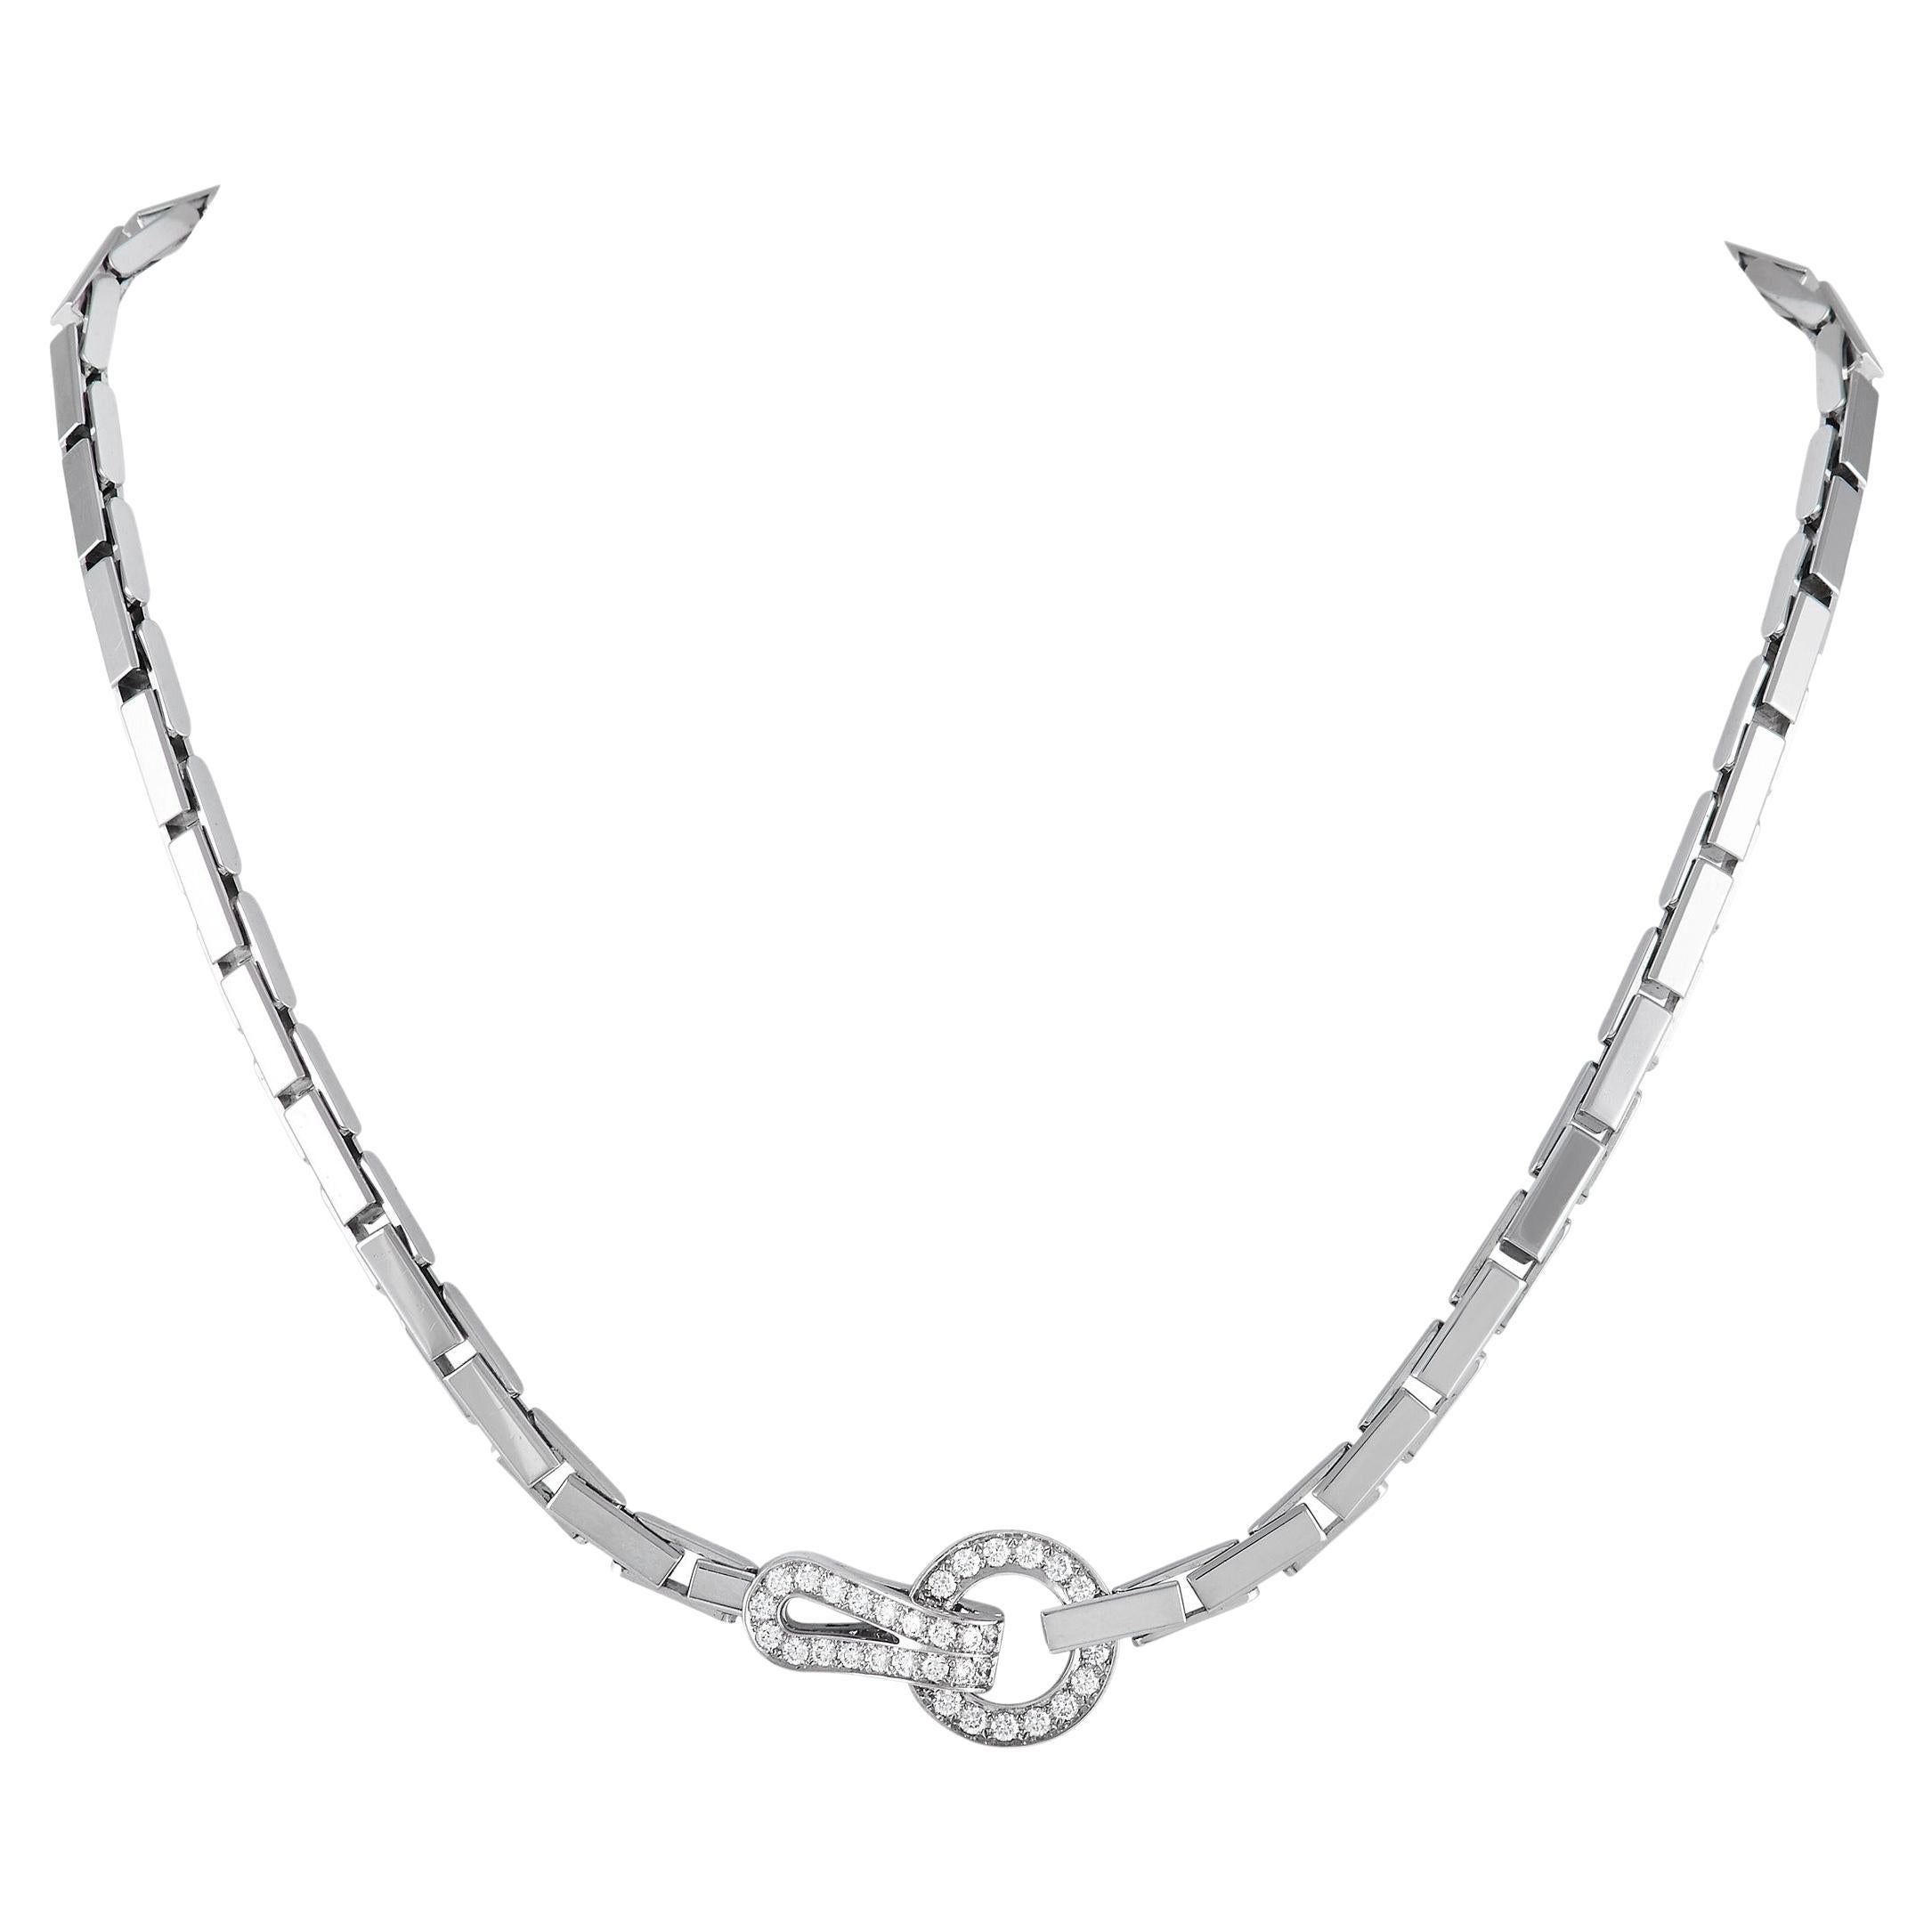 Cartier Agrafe 18K White Gold 1.10 ct Diamond Necklace